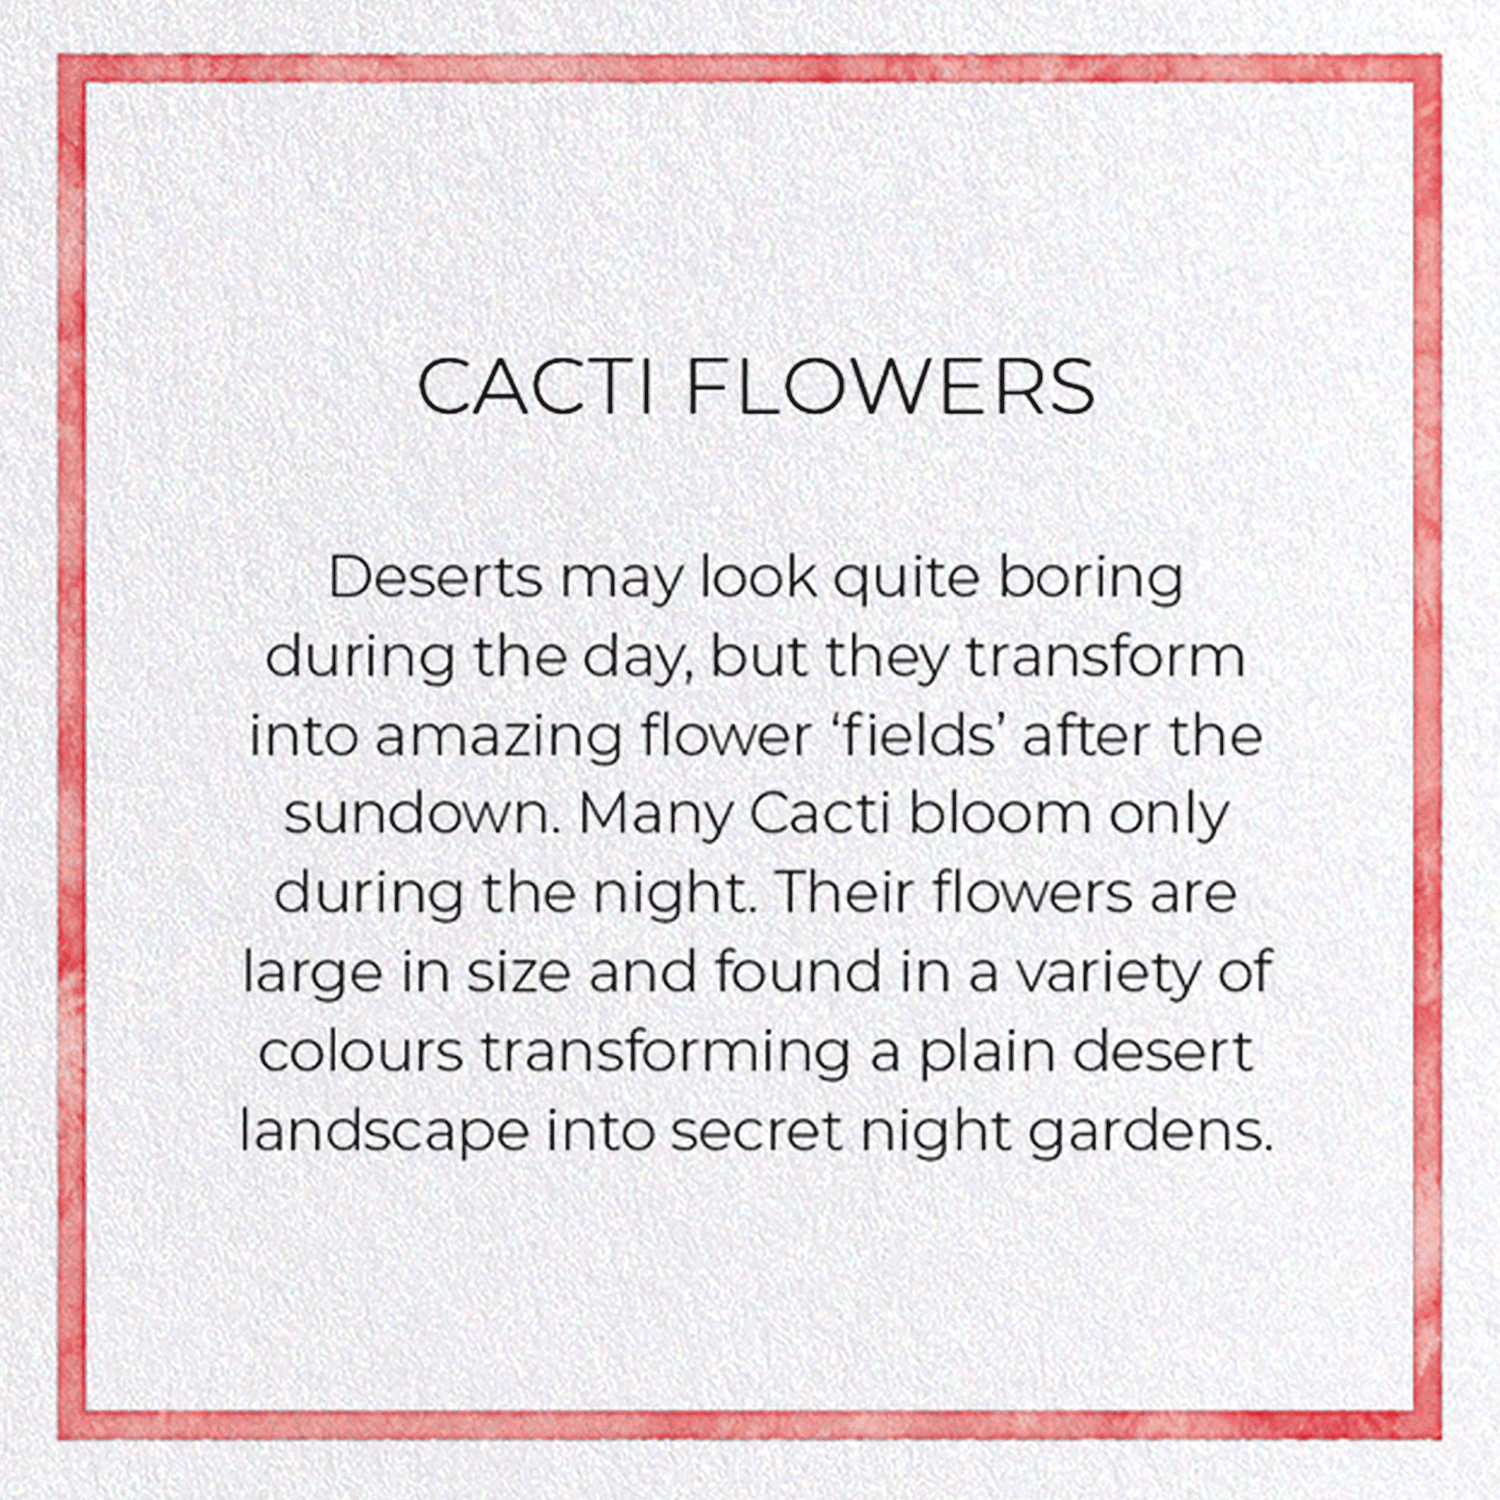 CACTI FLOWERS